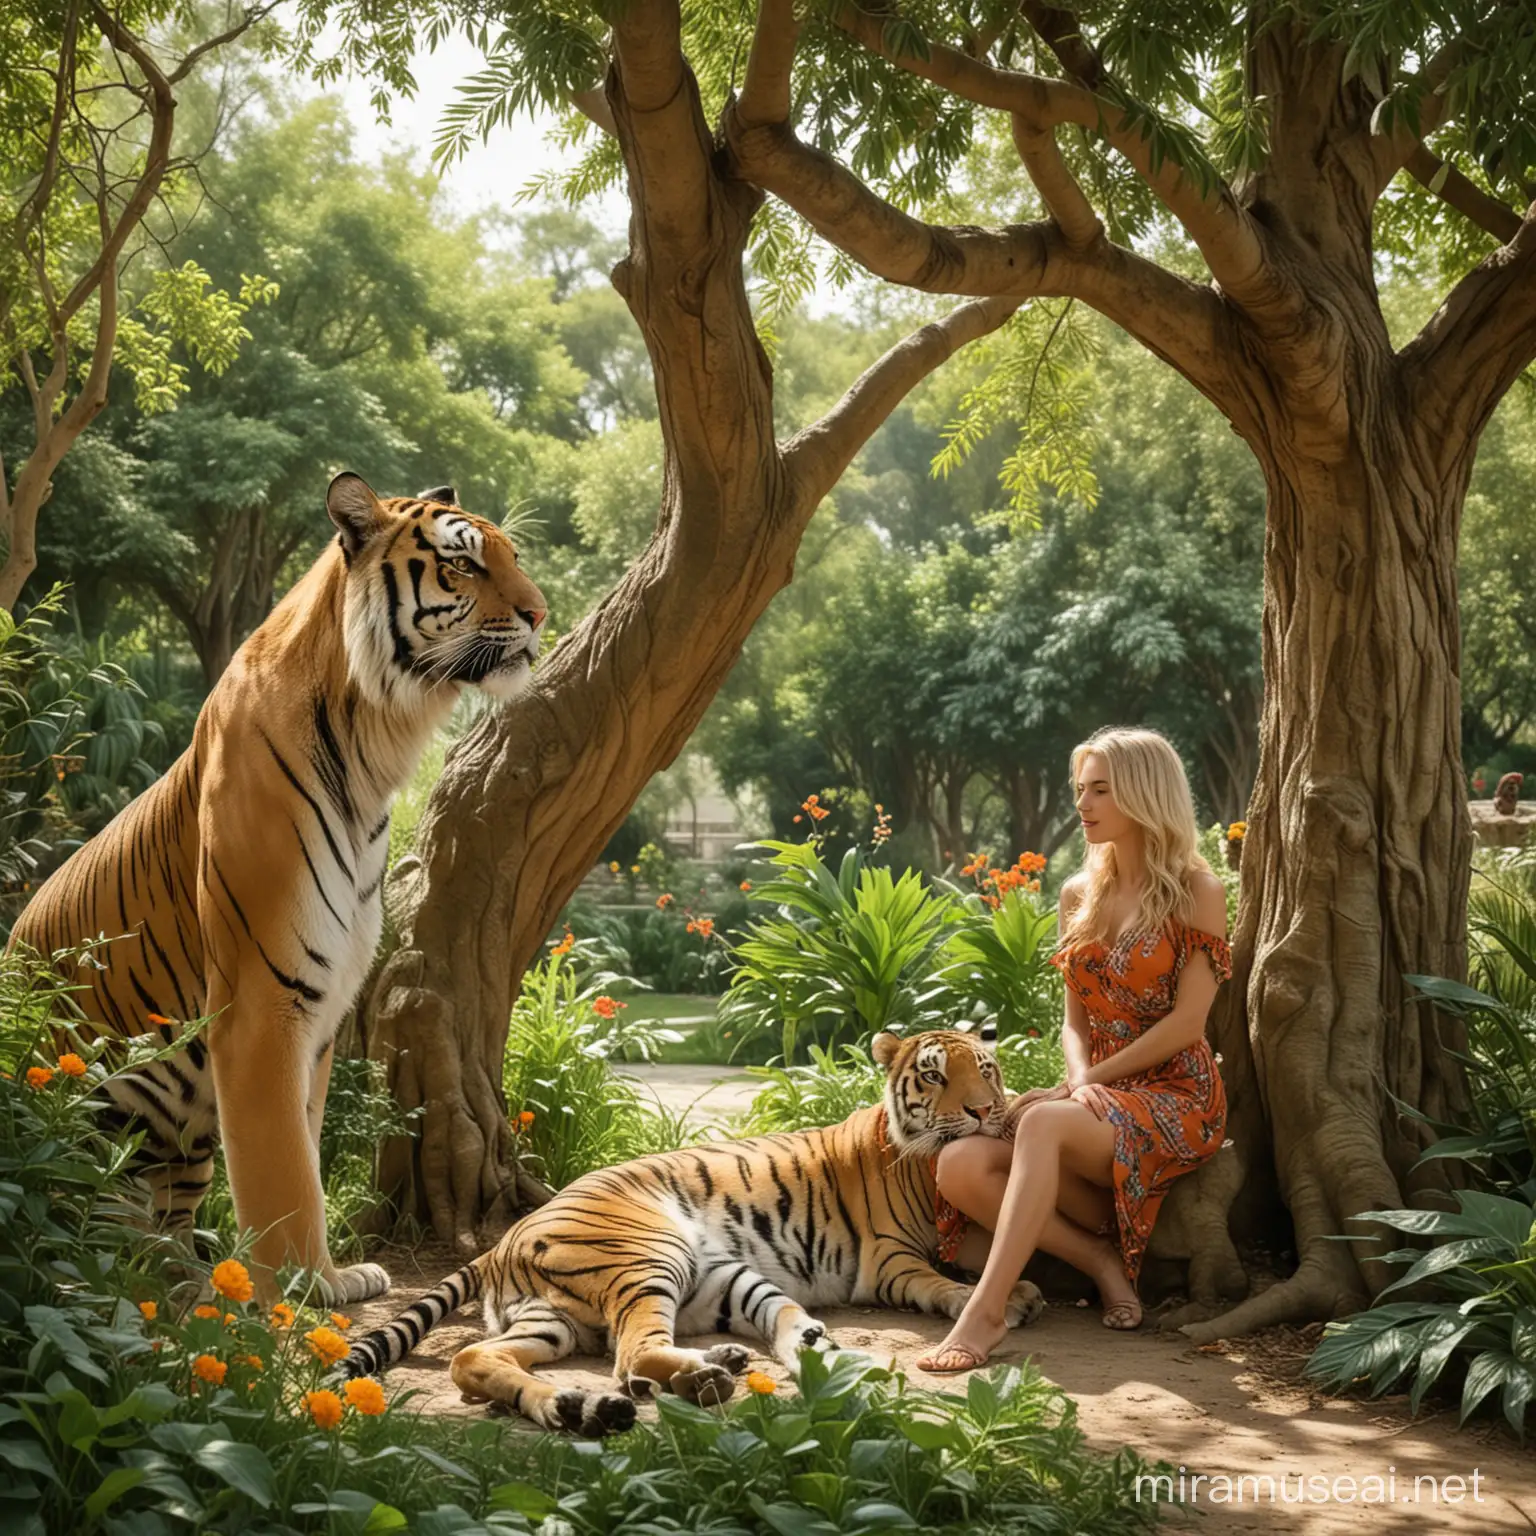 Landscape Eden Garden with Blonde Woman and Tiger